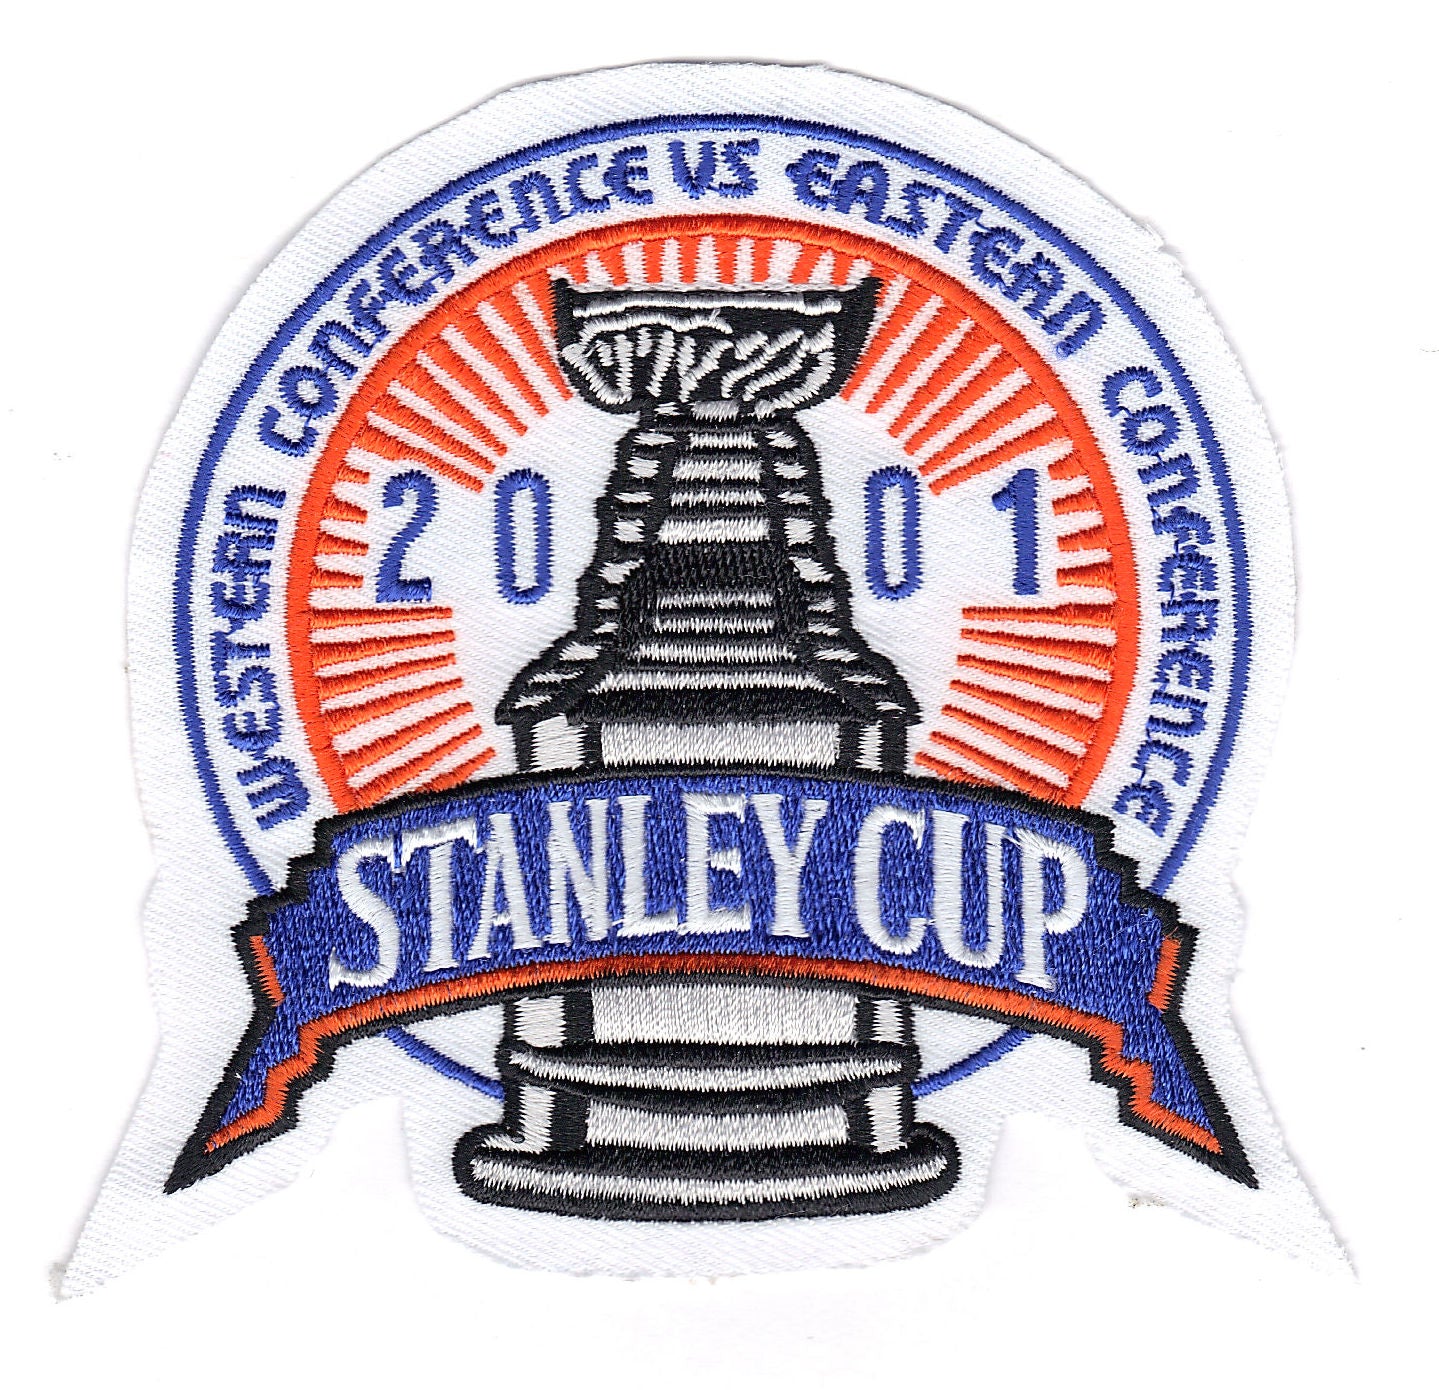 2001 NHL Stanley Cup Final Logo Jersey Patch (New Jersey Devils vs. Colorado Avalanche) 